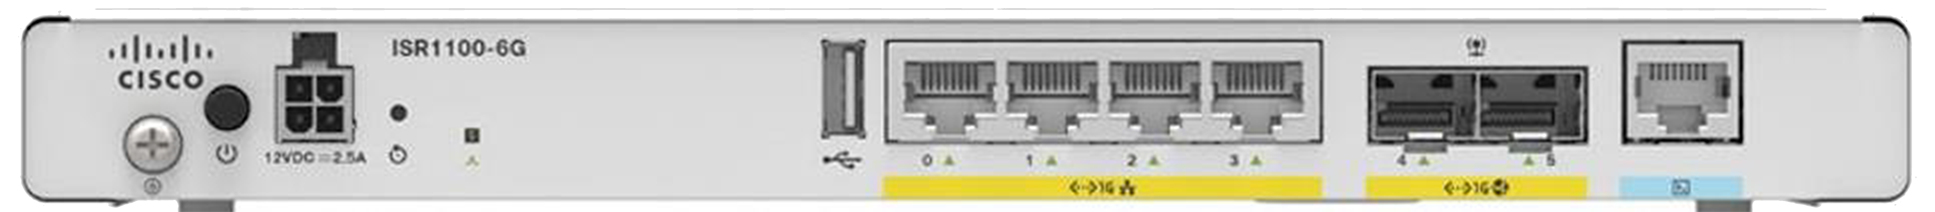 Photos - Router Cisco ISR1100-6G wired  Gigabit Ethernet Grey 